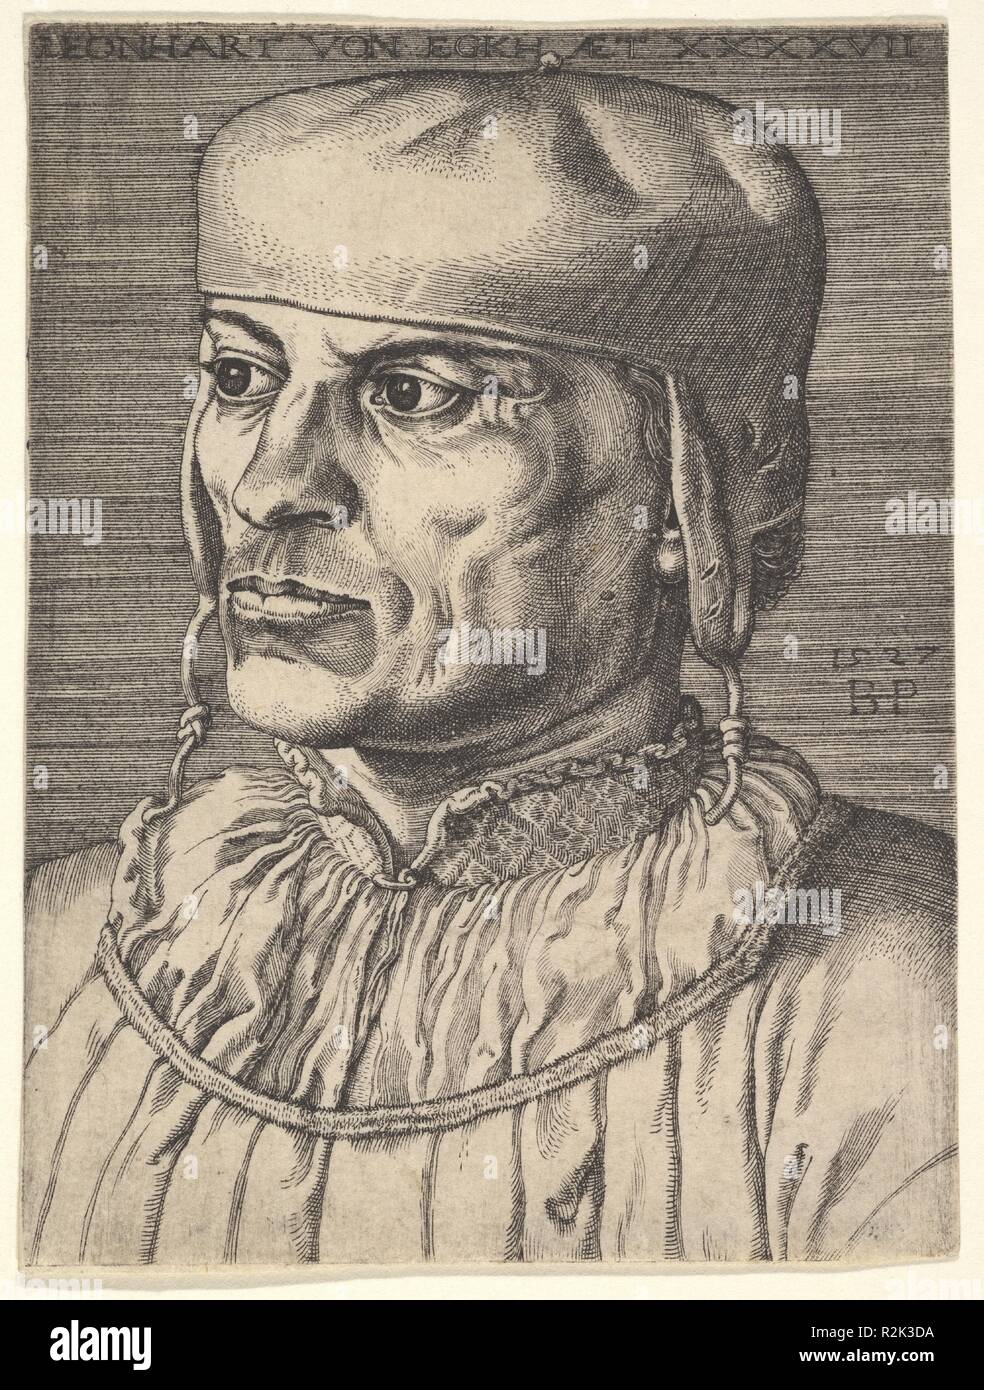 Leonhart von Eck. Artist: Barthel Beham (German, Nuremberg ca. 1502-1540 Italy). Dimensions: Sheet: 4 5/16 x 3 1/4 in. (10.9 x 8.2 cm). Date: 1527. Museum: Metropolitan Museum of Art, New York, USA. Stock Photo